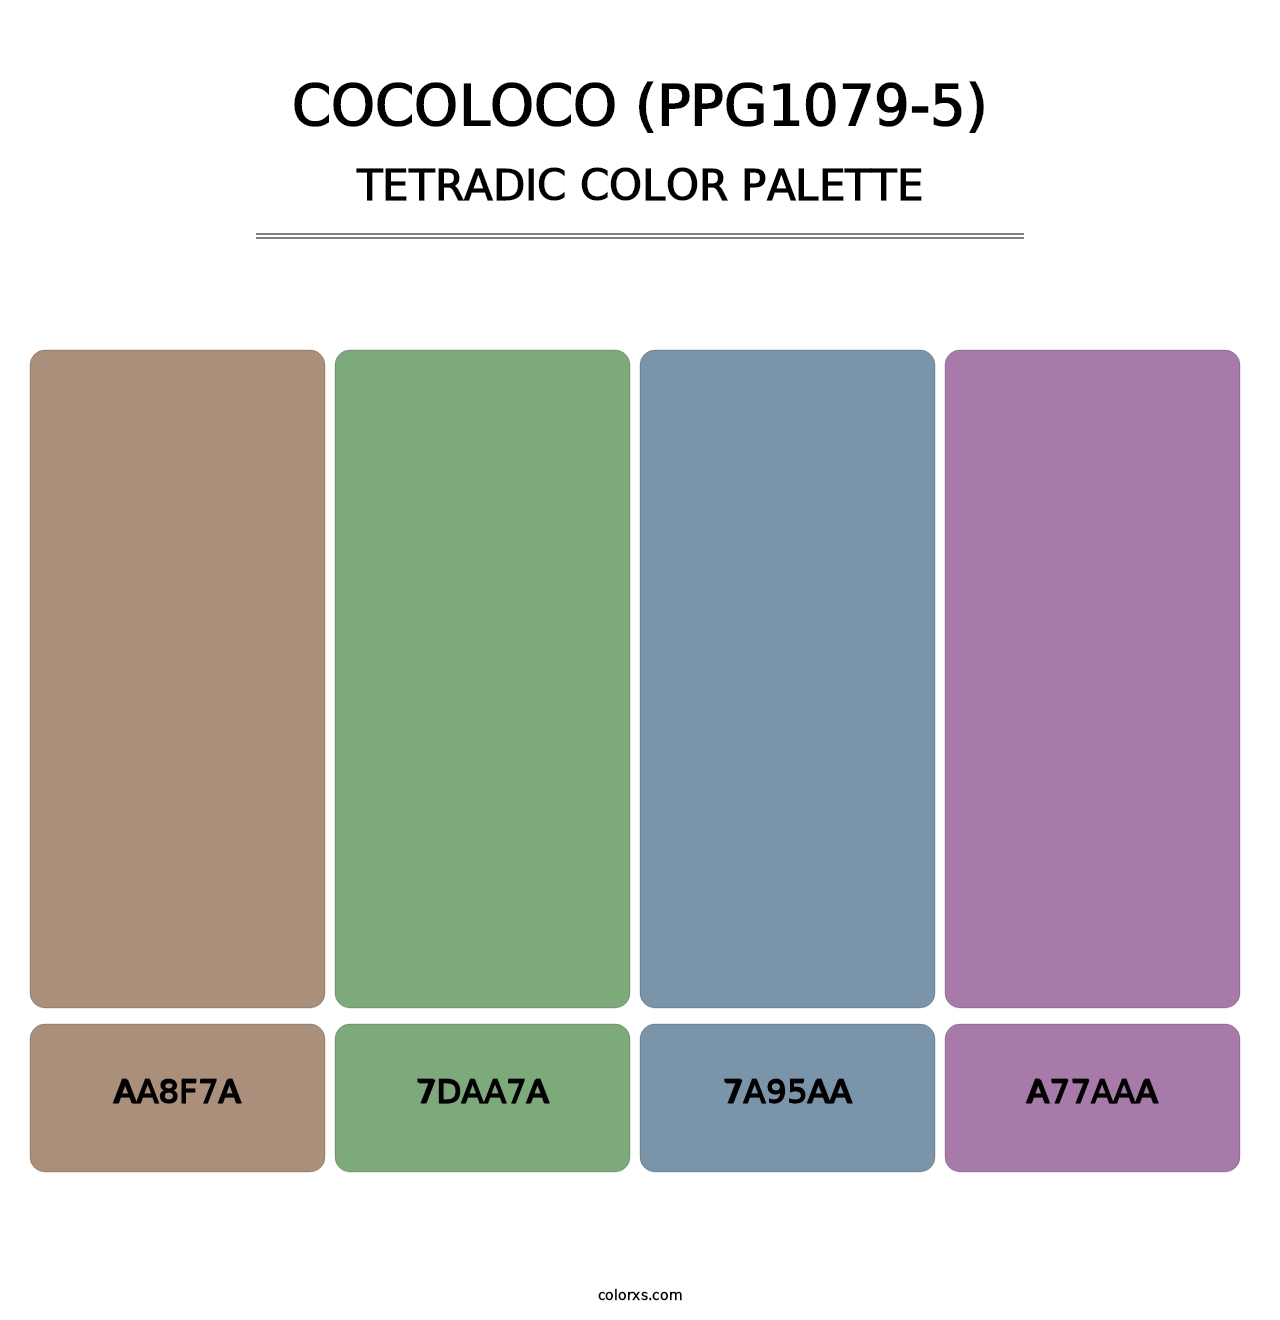 Cocoloco (PPG1079-5) - Tetradic Color Palette